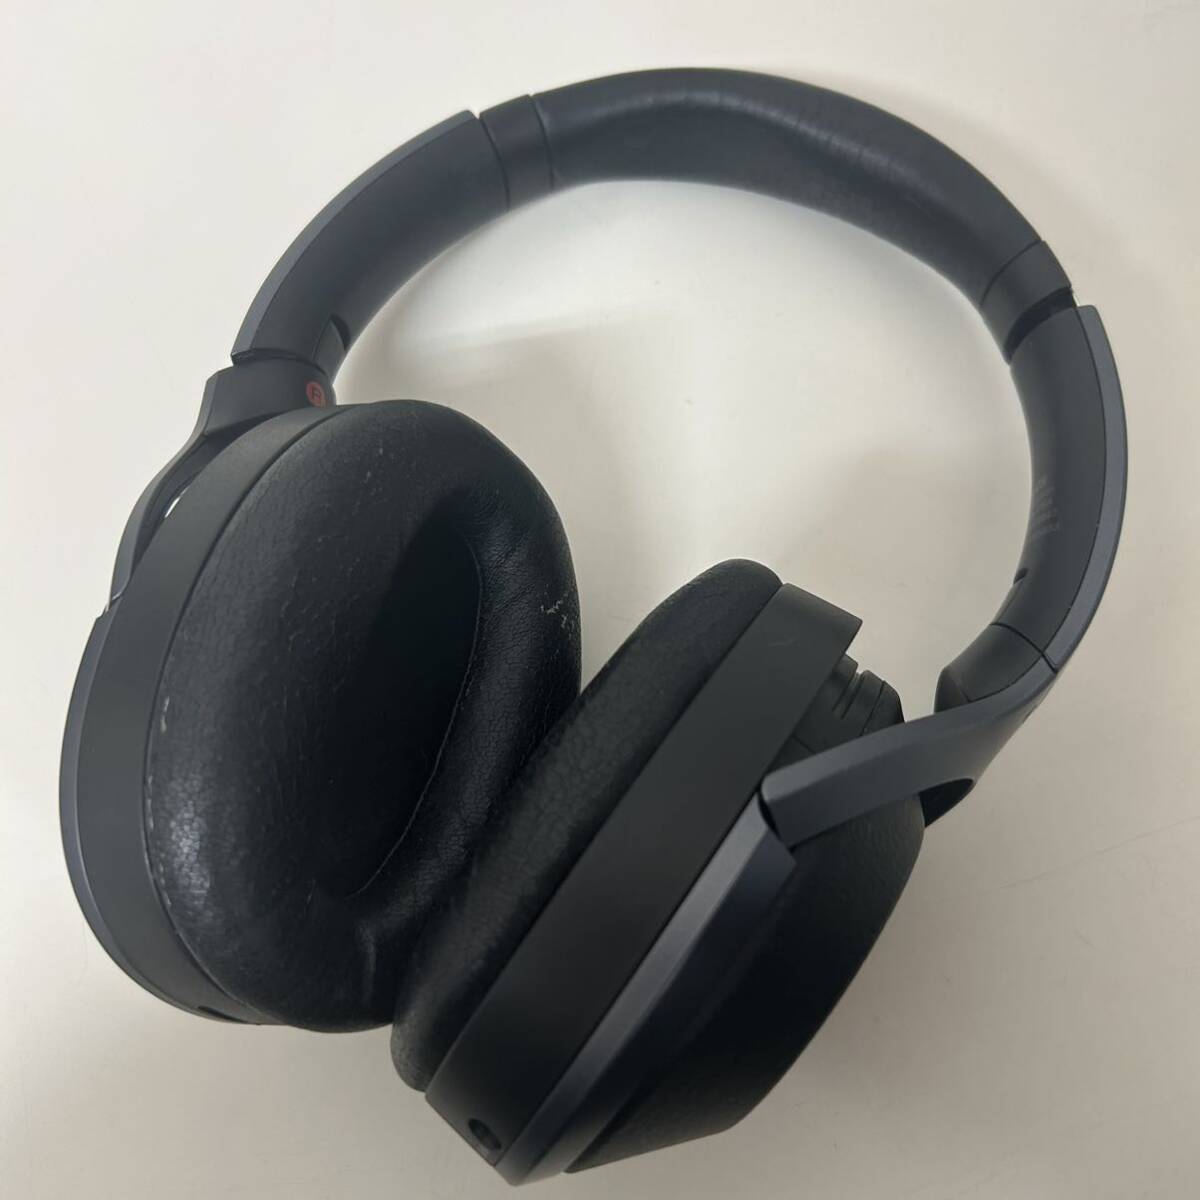 [1 jpy start ]SONY Sony WH-1000XM2 wireless noise cancel ring headphone black 